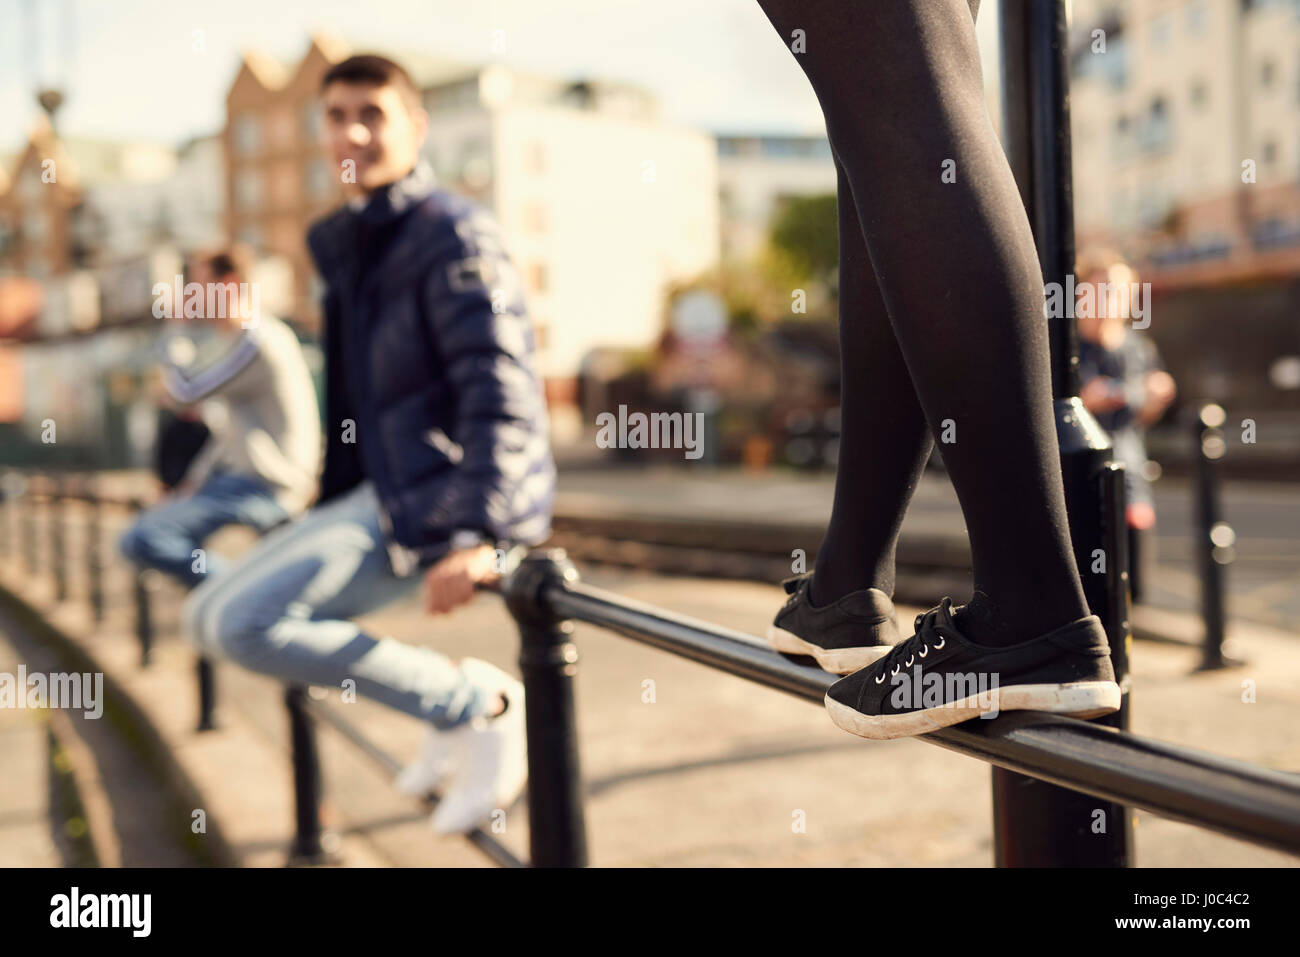 Young man sitting on railing, young girl walking along railing next to him, Bristol, UK Stock Photo